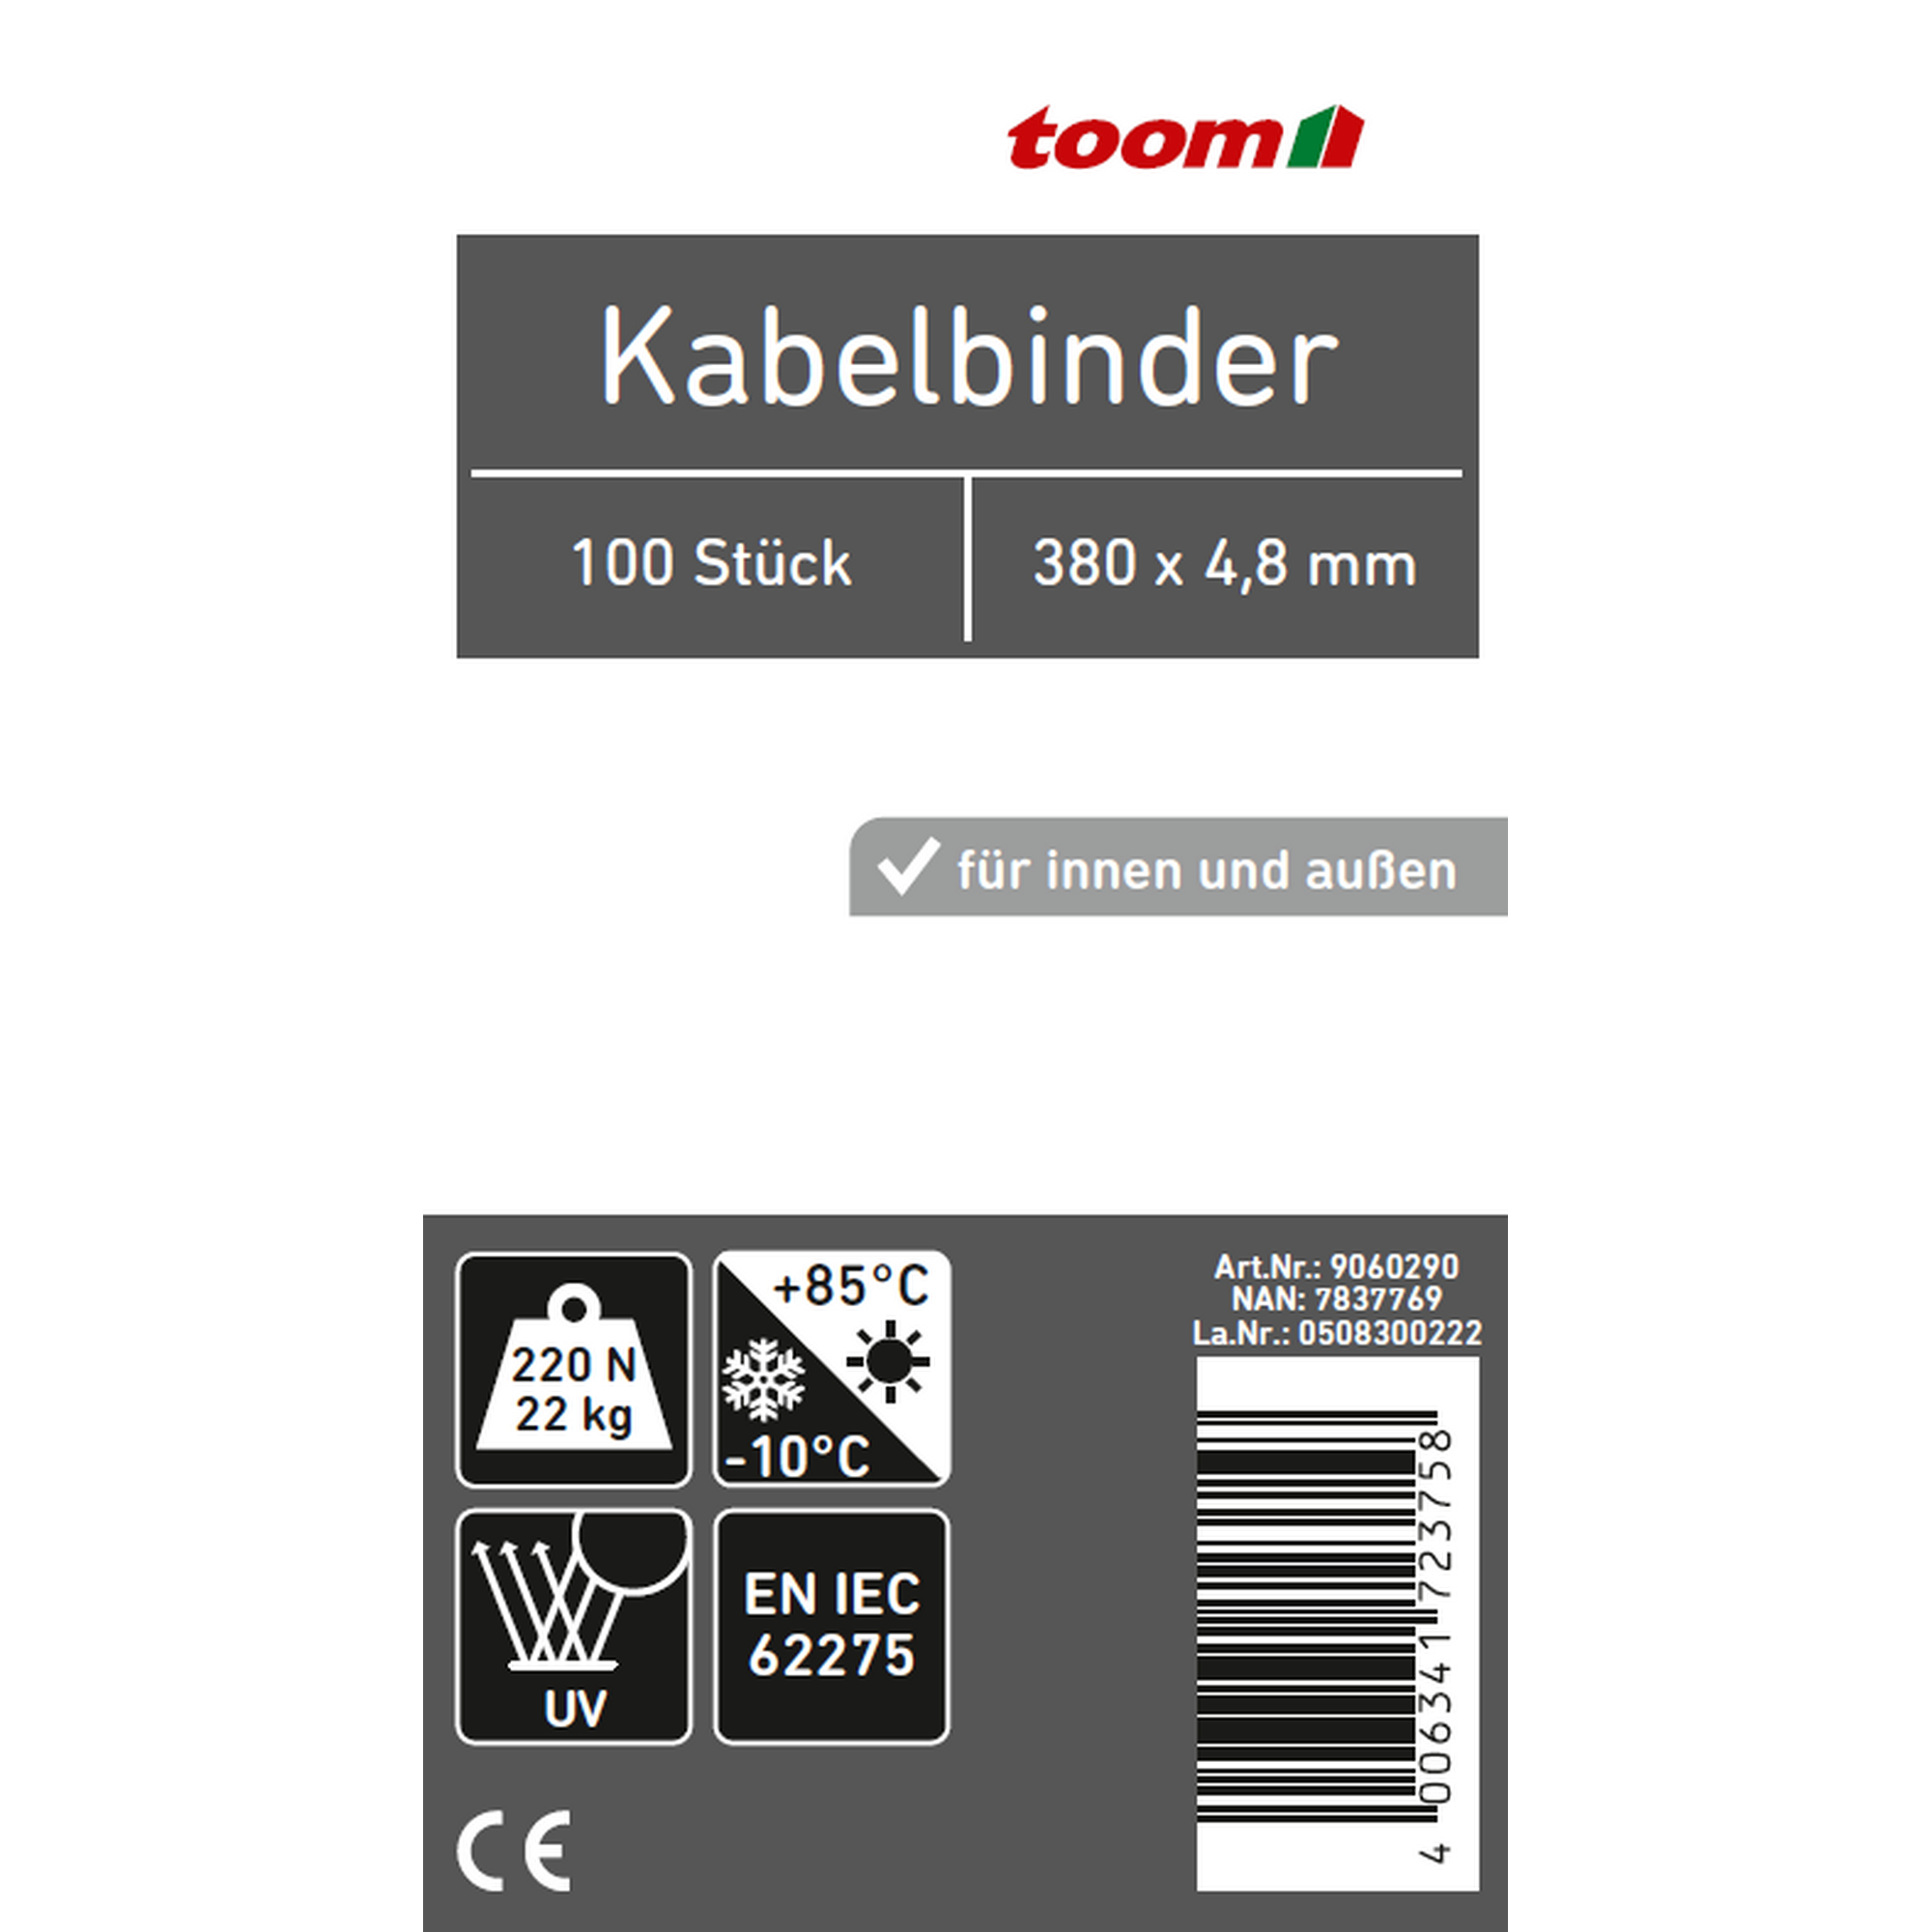 Kabelbinder schwarz 4,8 x 380 mm 100 Stück + product picture